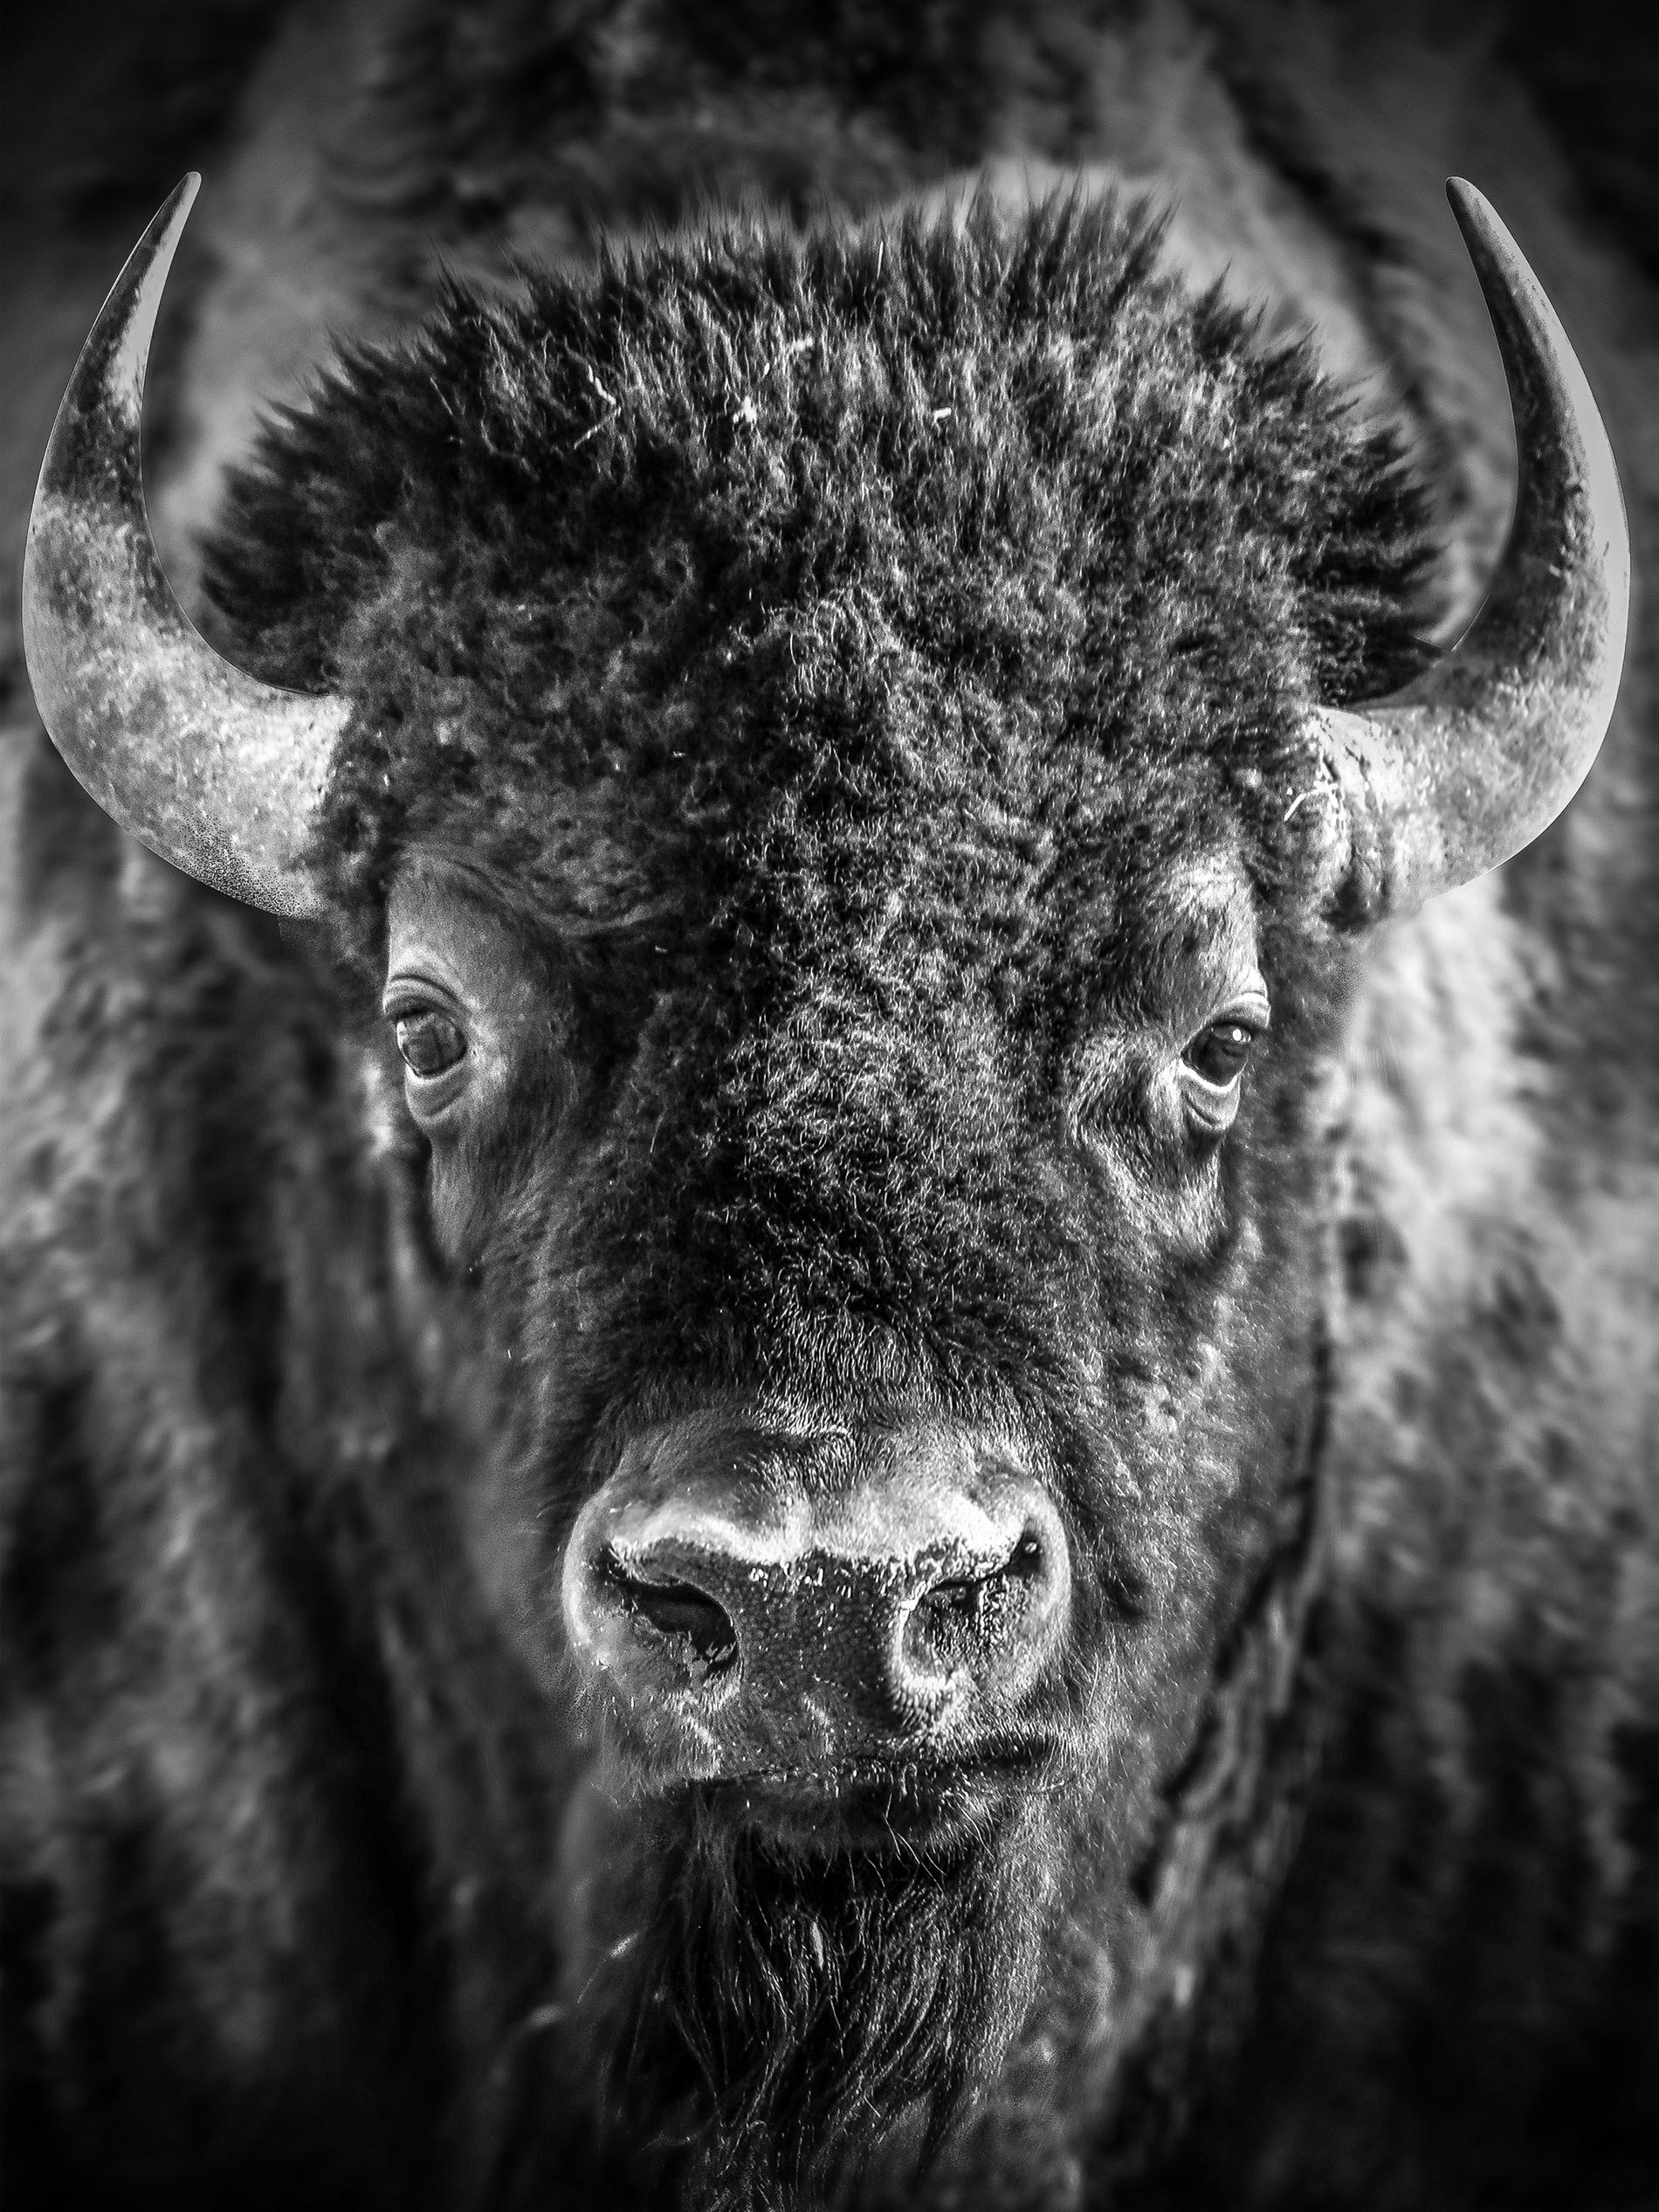 Shane Russeck Animal Print - "Bison Portrait" 36x48 - Black & White Photography, Bison, Photograph Fine Art